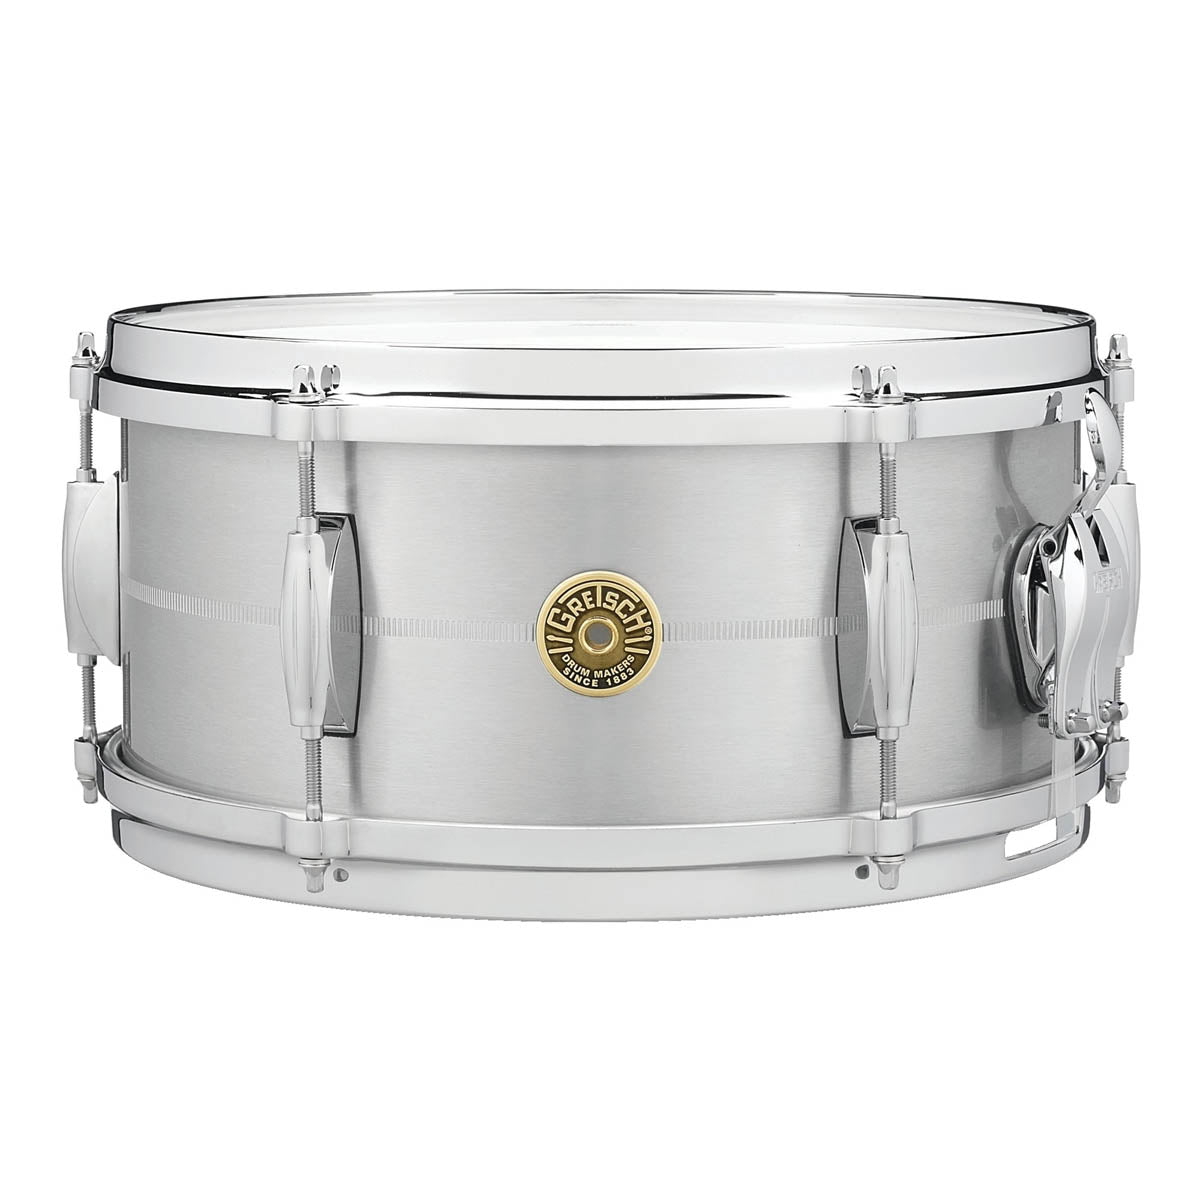 Gretsch USA Solid Aluminium 13"x6" Snare Drum